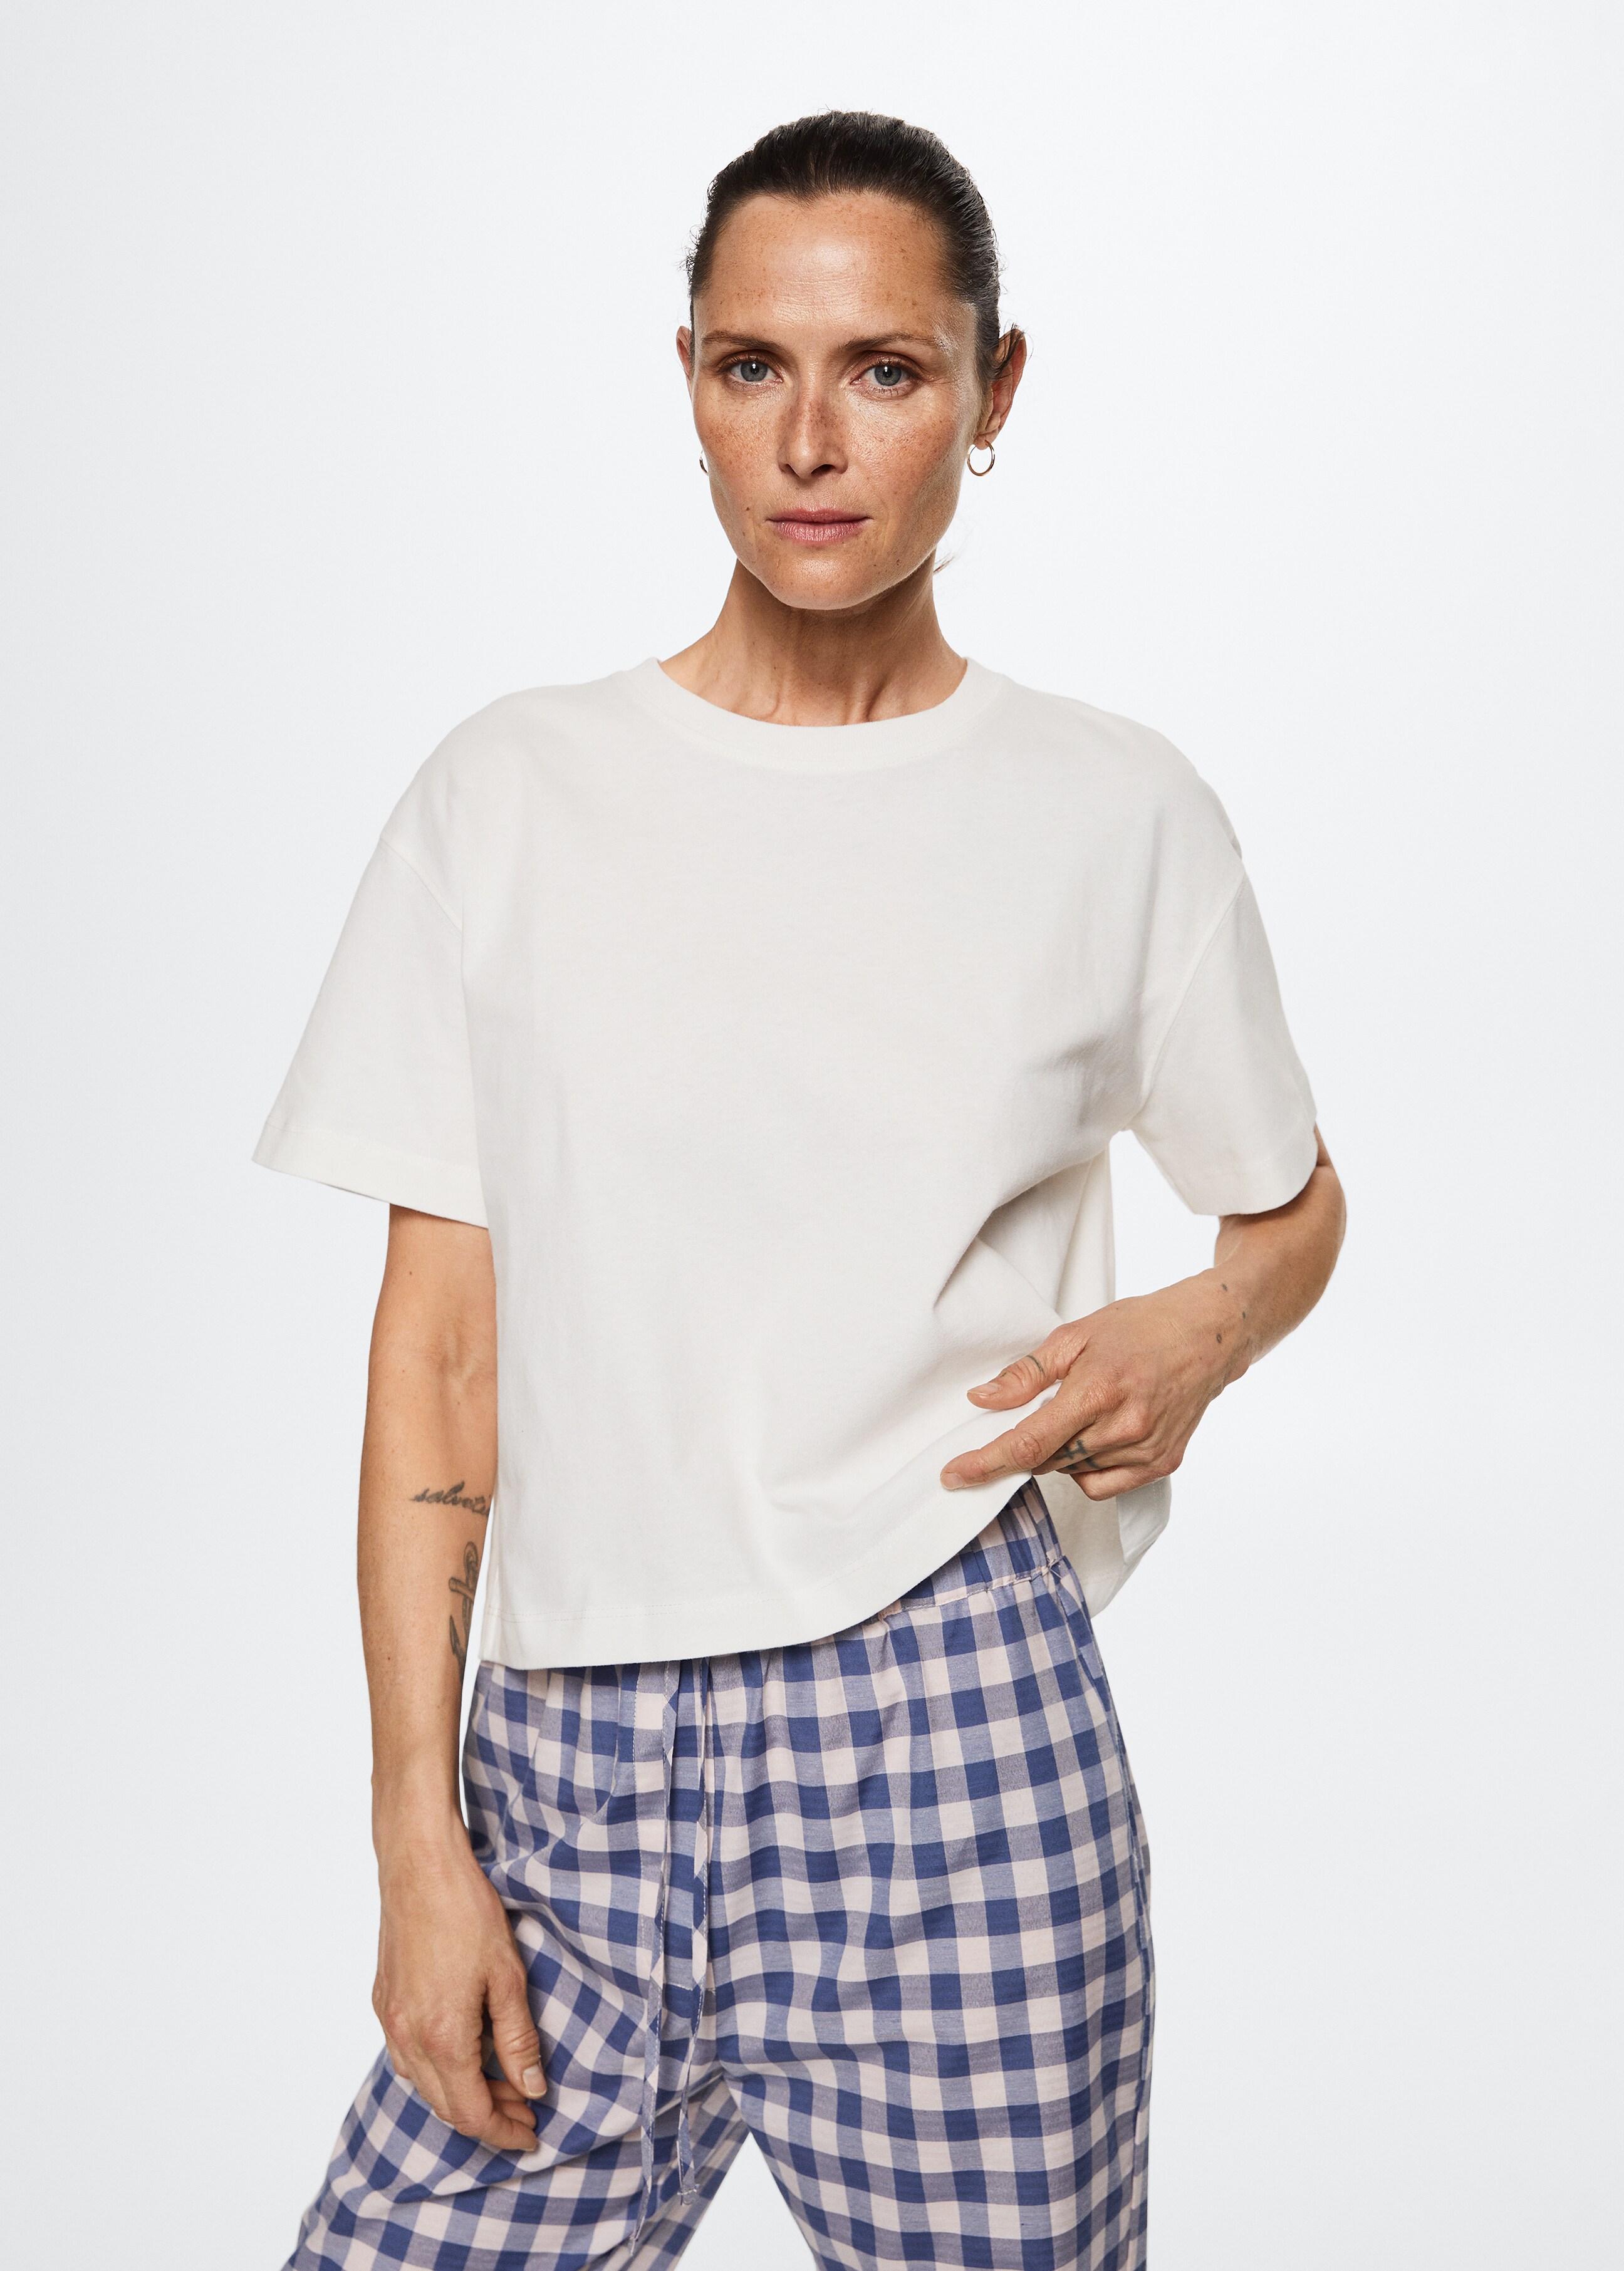 Camiseta pijama cómodo - Plano medio